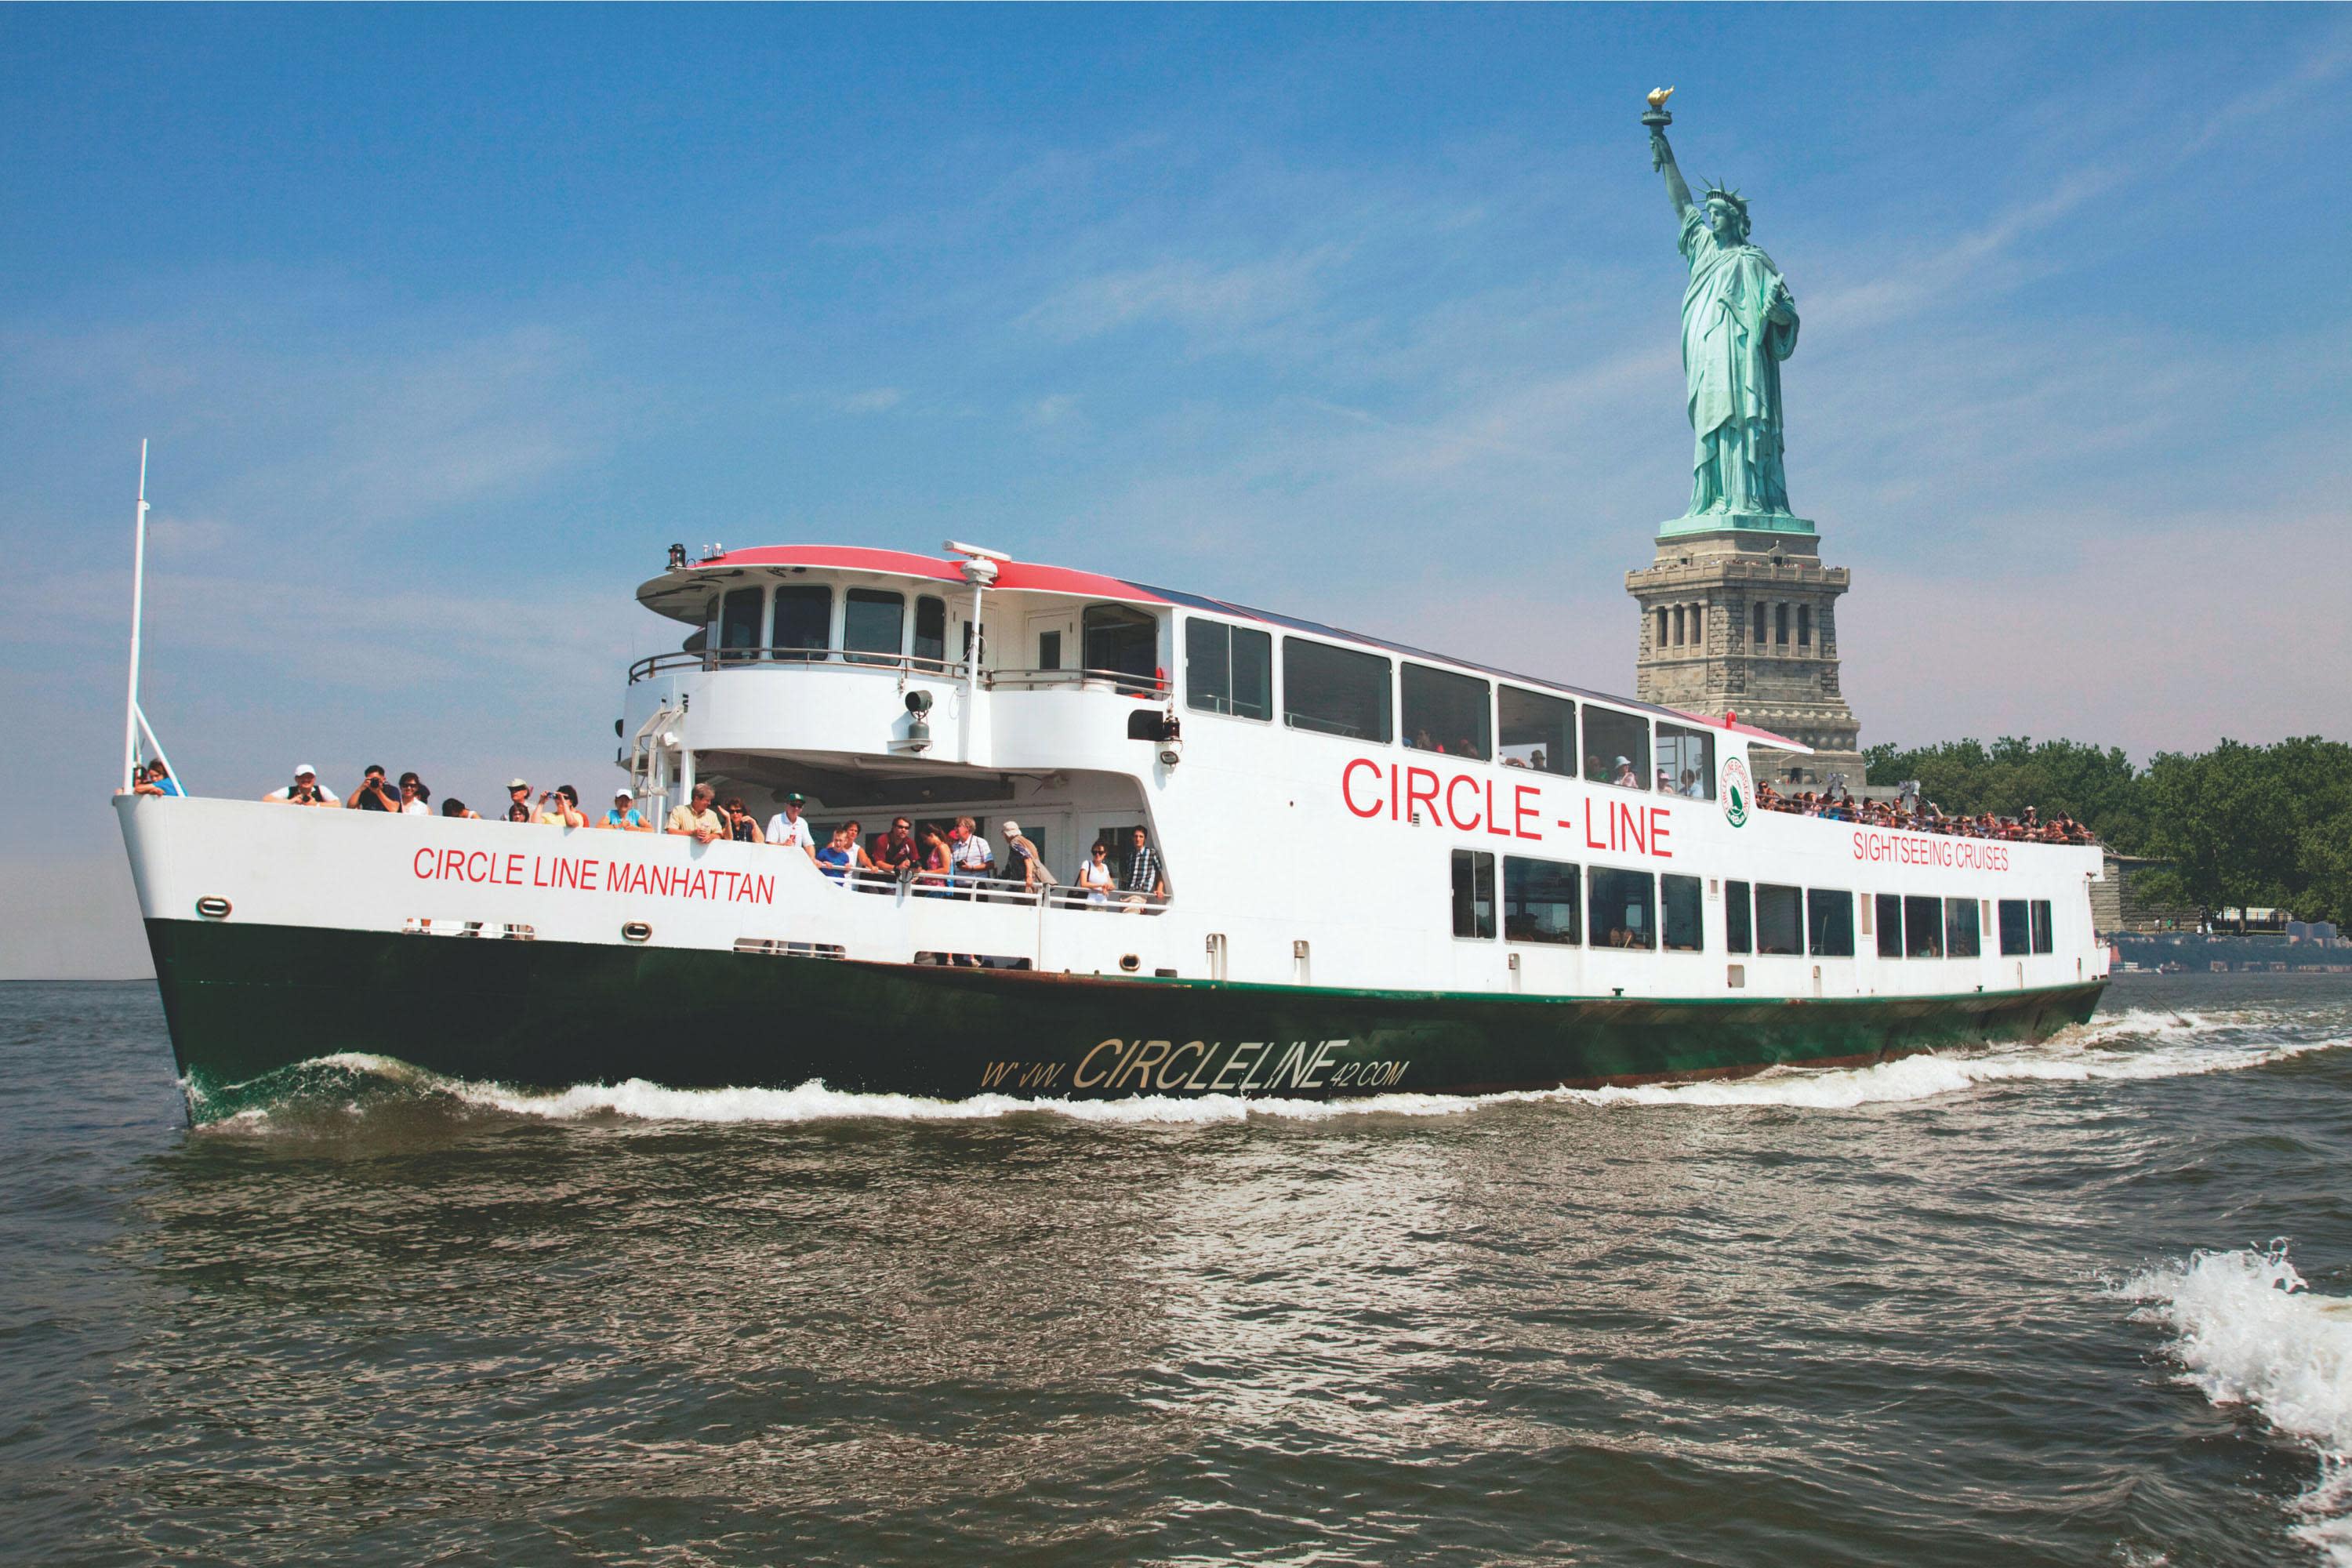 circle line sightseeing cruises reviews